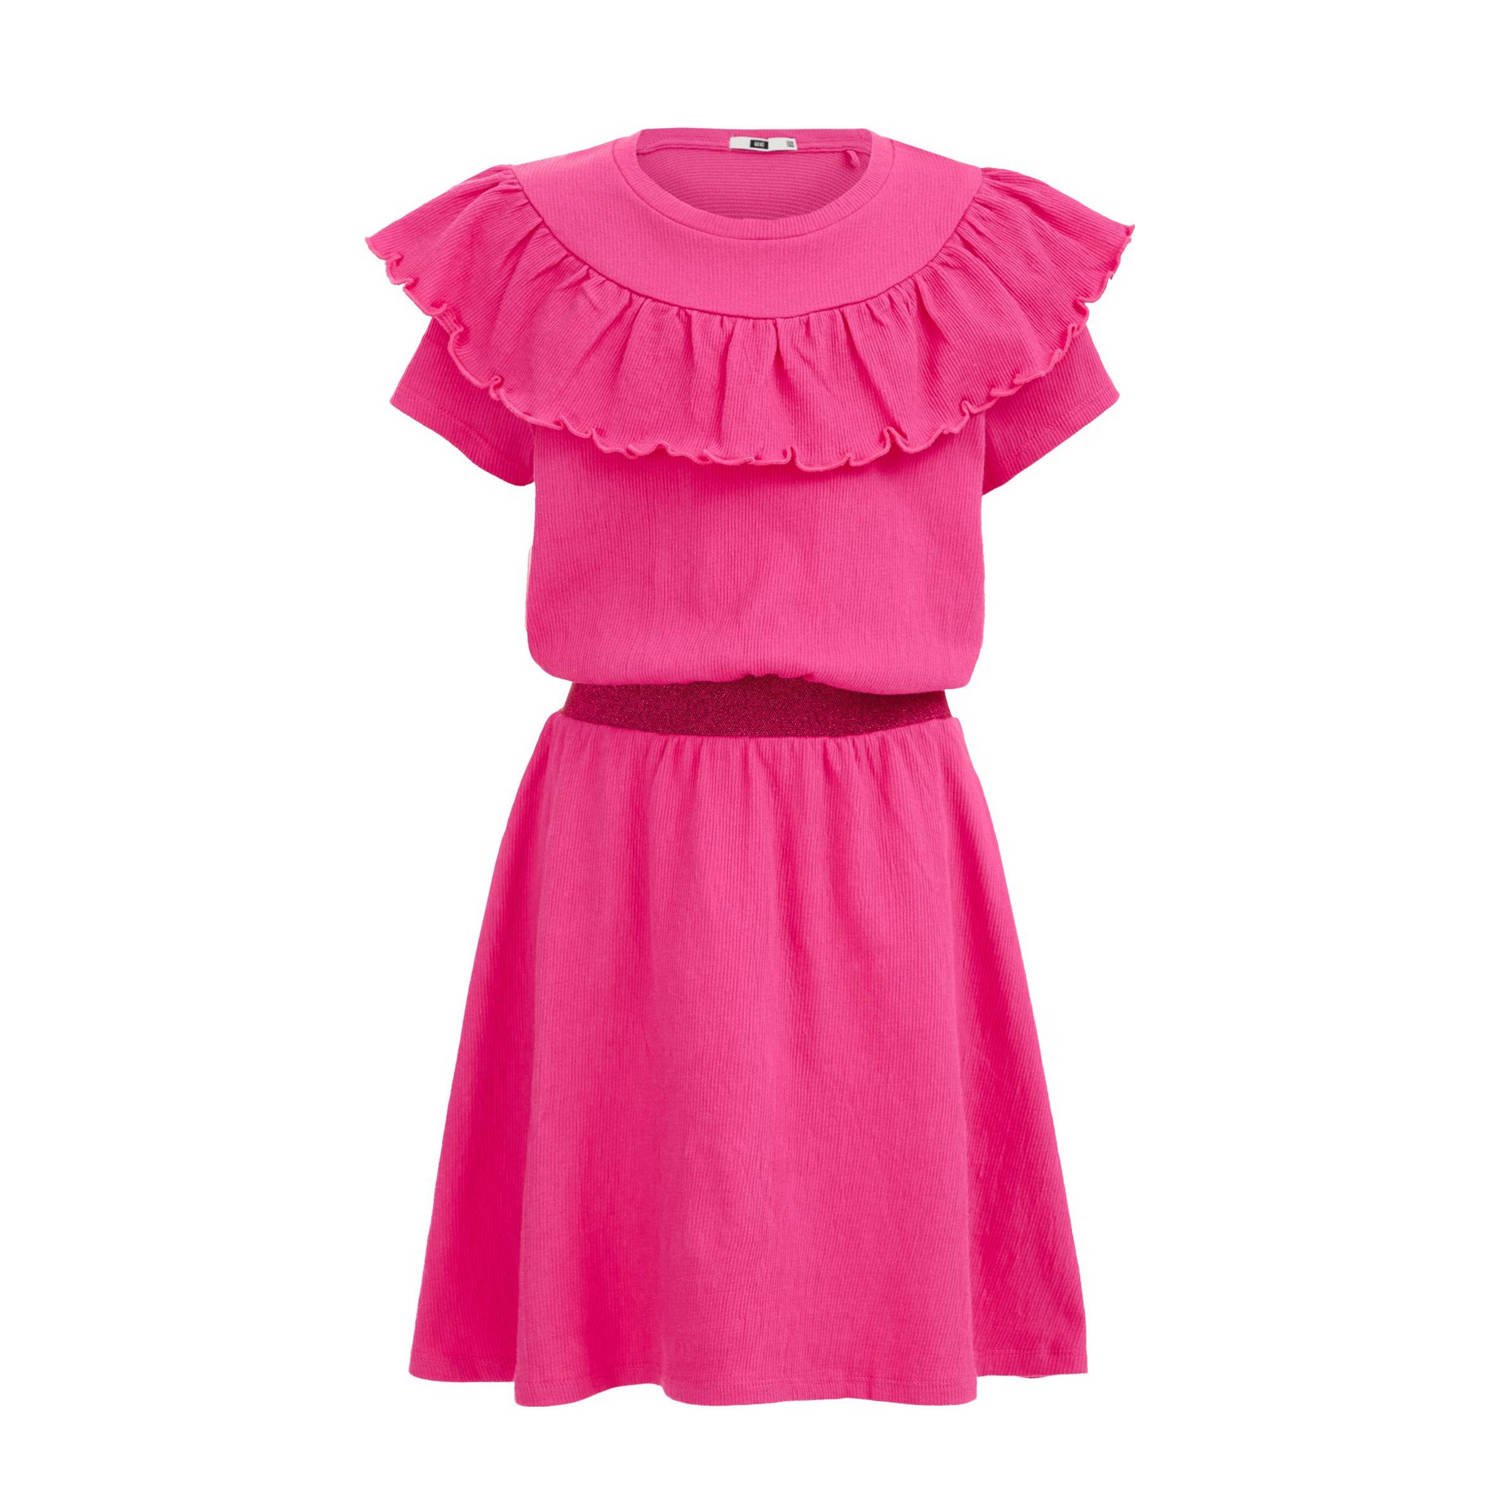 WE Fashion jurk roze Meisjes Katoen Ronde hals Effen 110 116